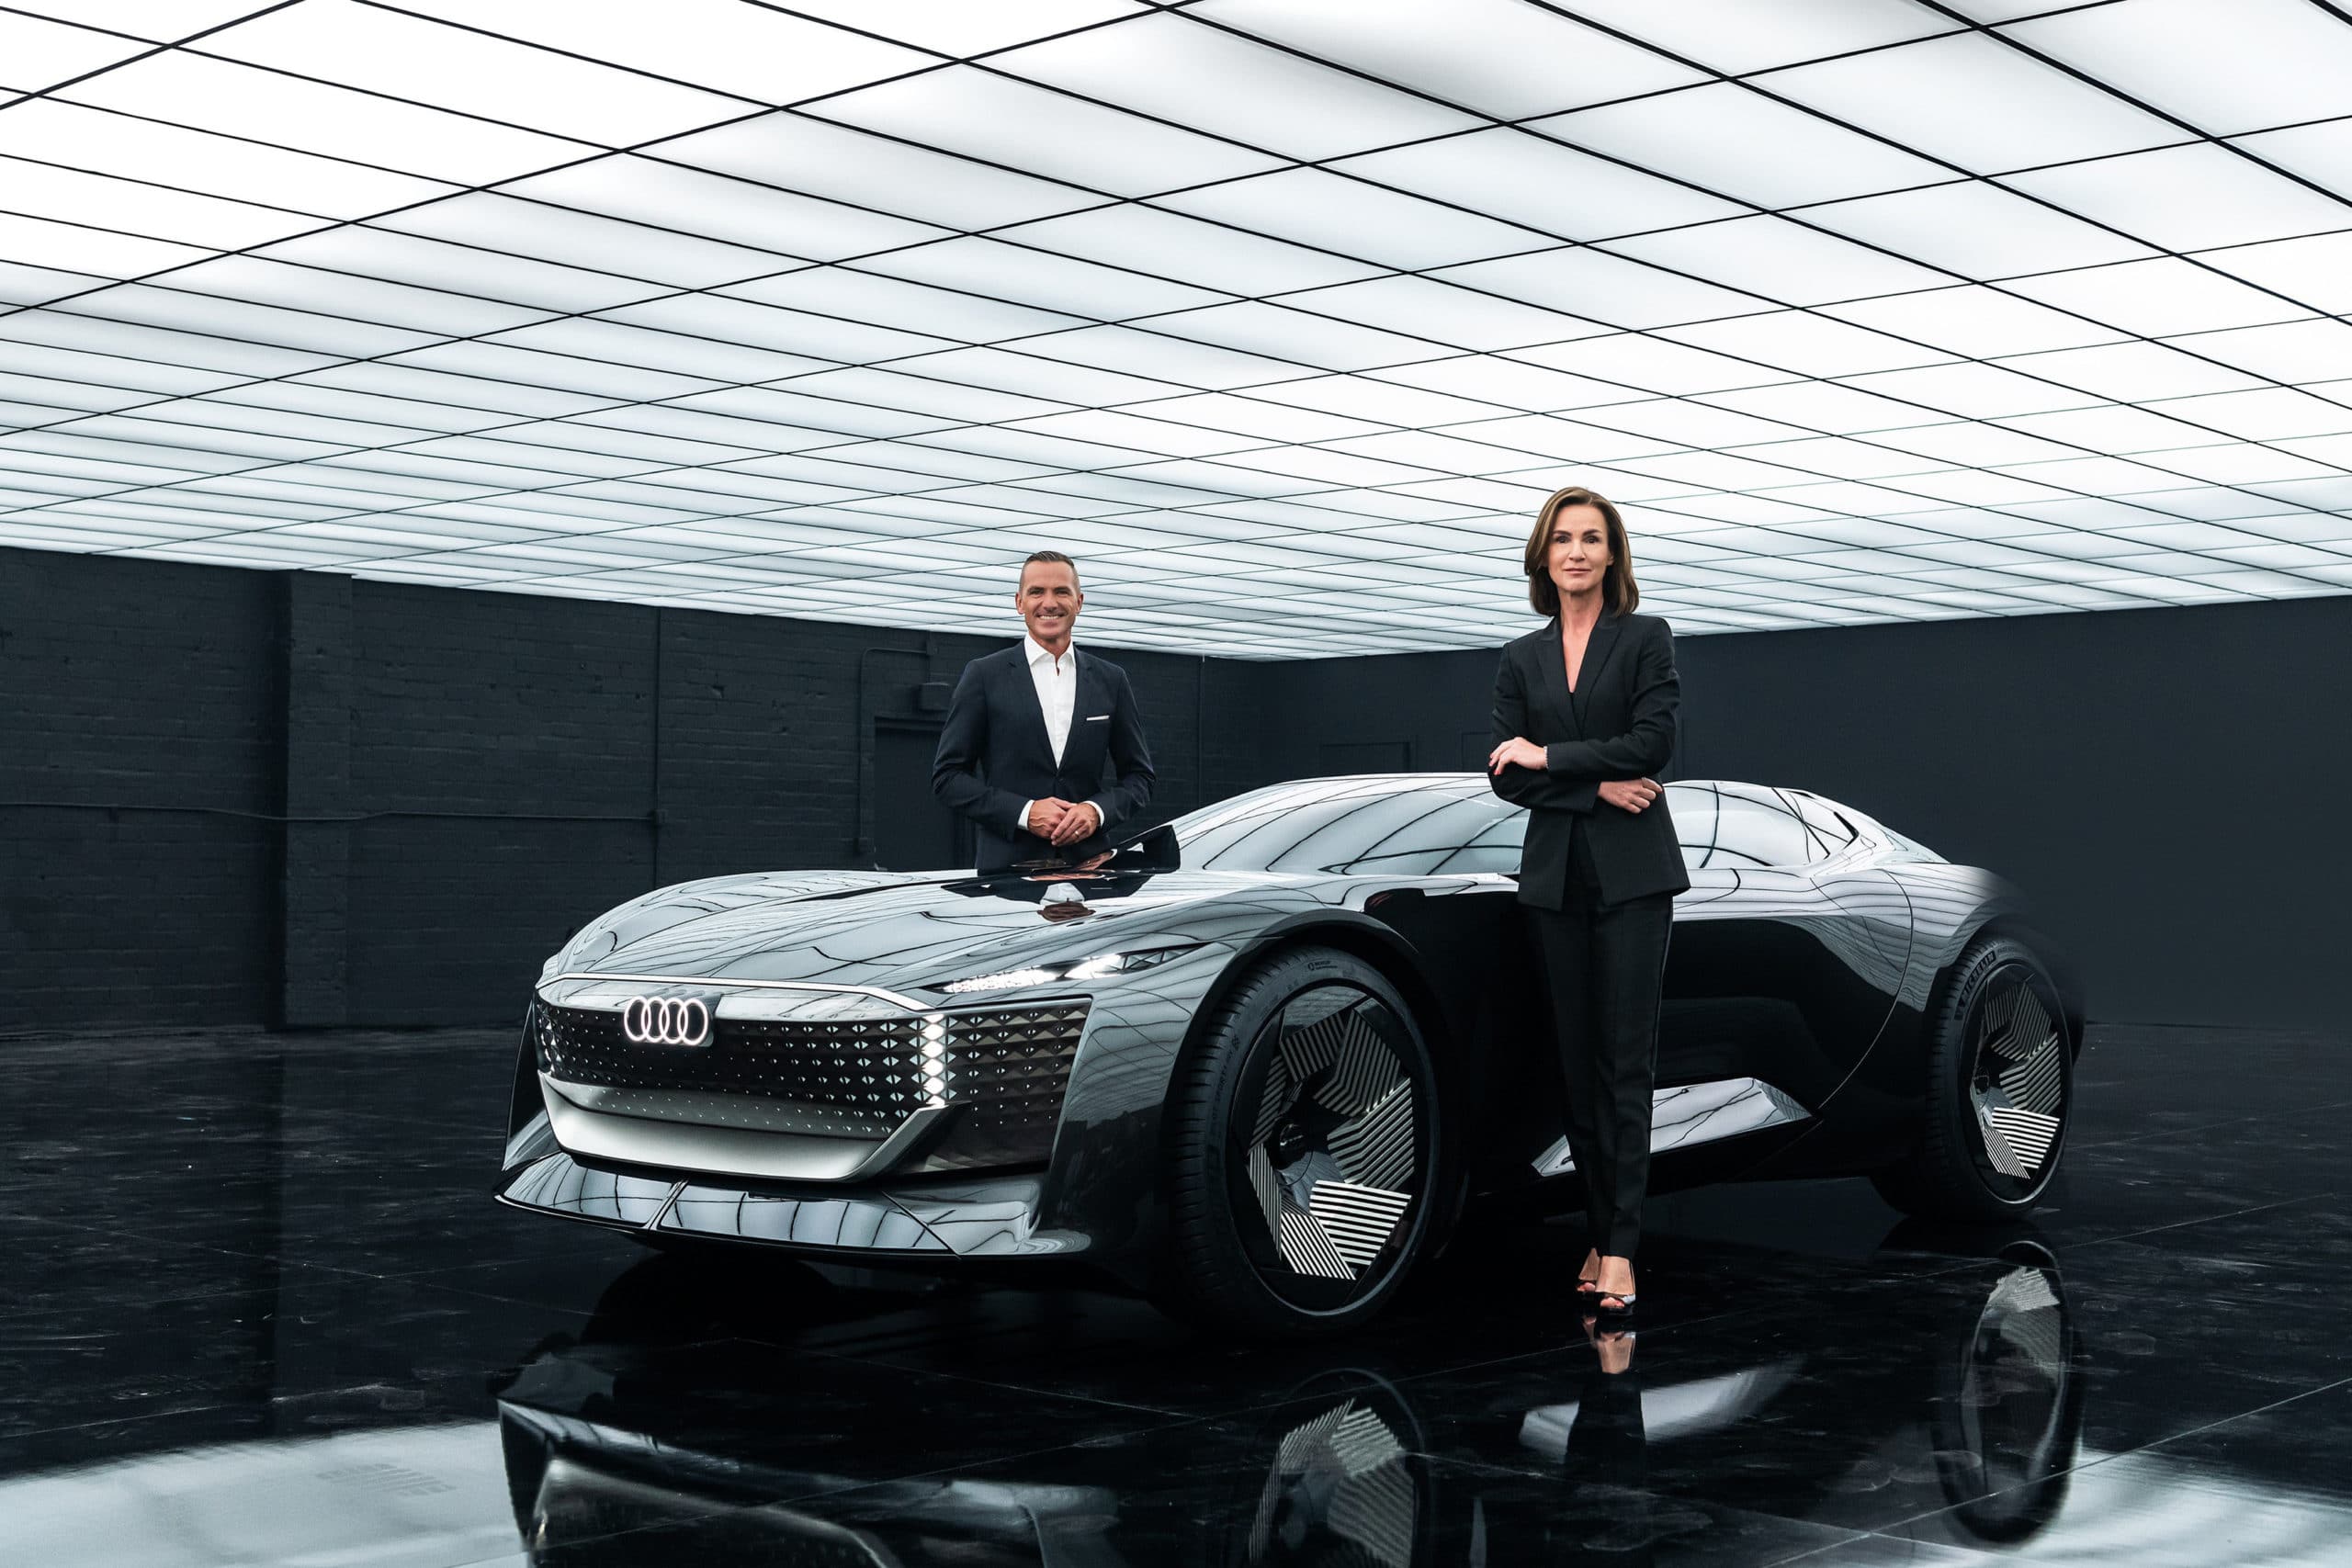 Audi skysphere concept – the future is wide open